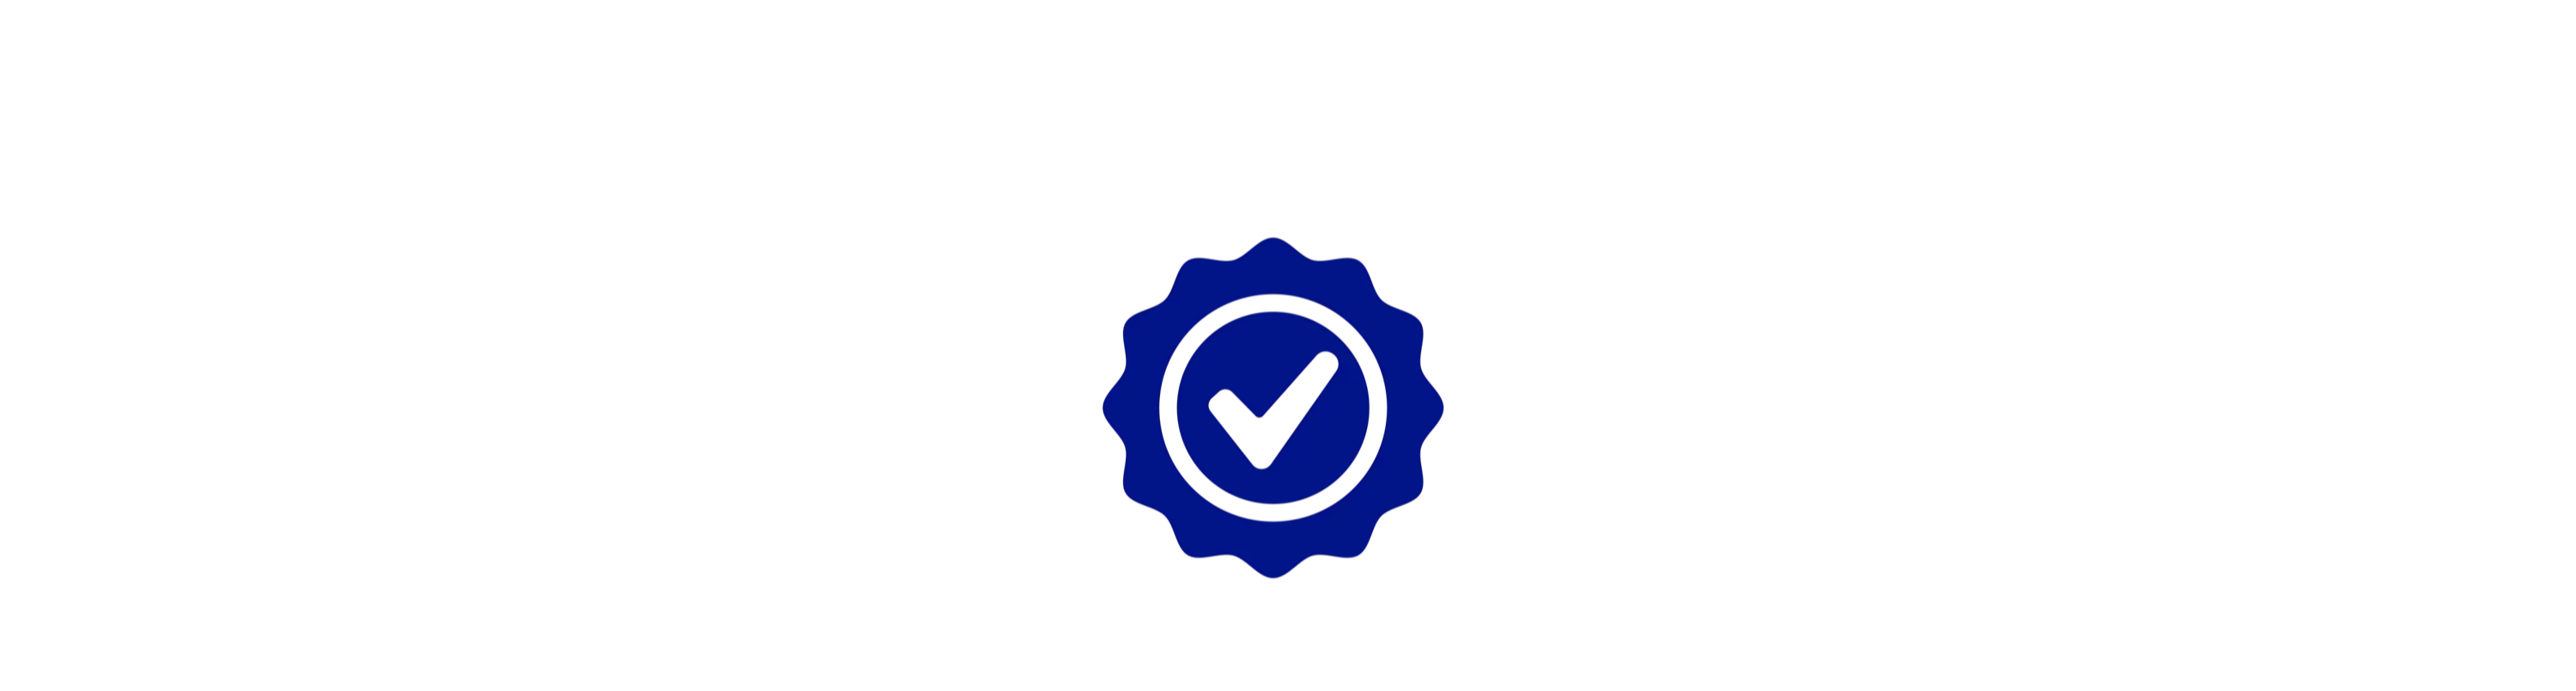 logo checkmark